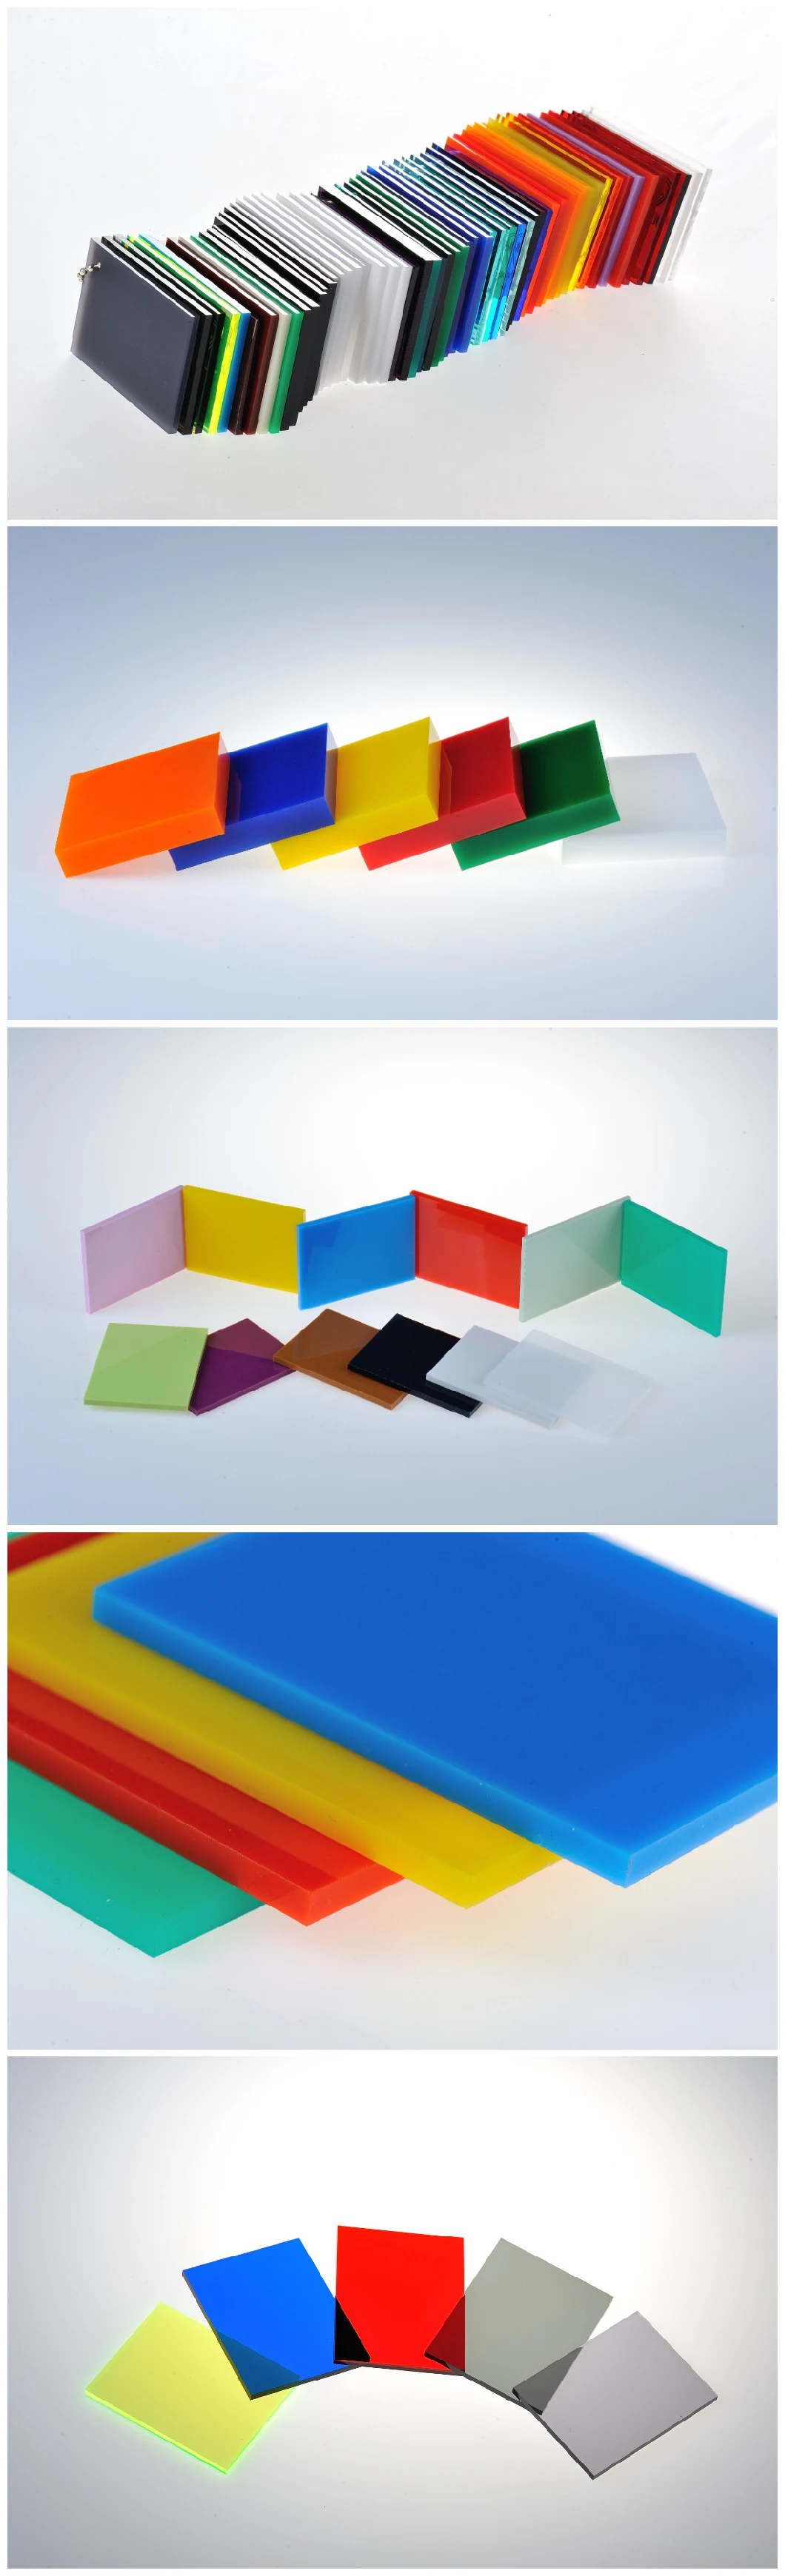 48X96 Inch Acrylic Sheet Display, Iridescent Acrylic Sheet, Plexiglass Sheet Wholesale